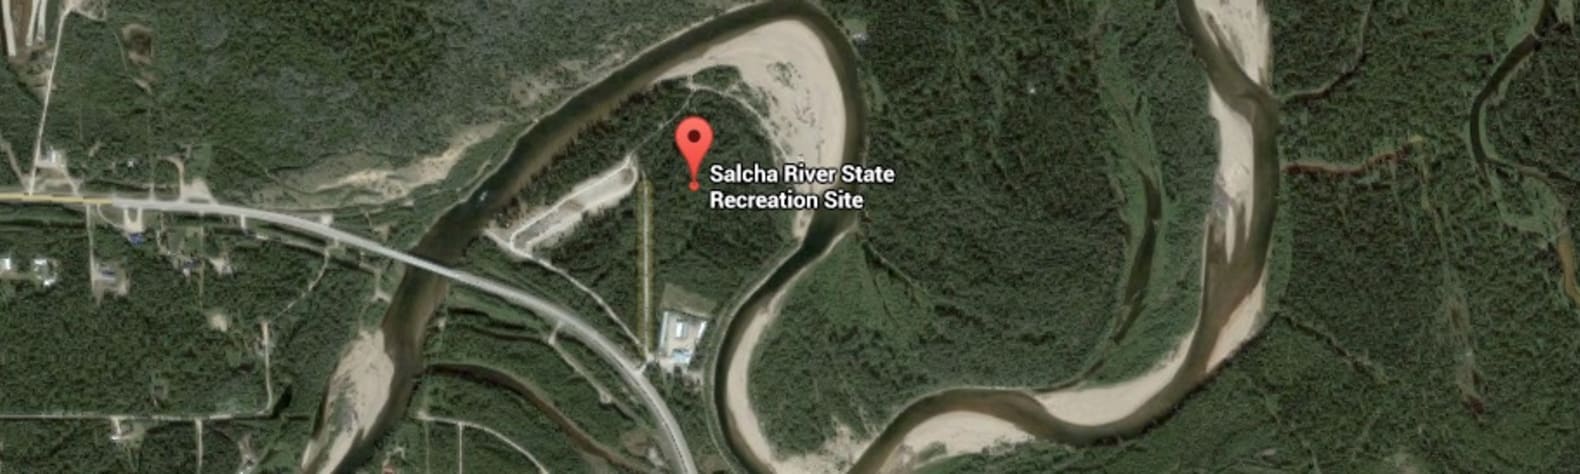 Salcha River State Recreation Site